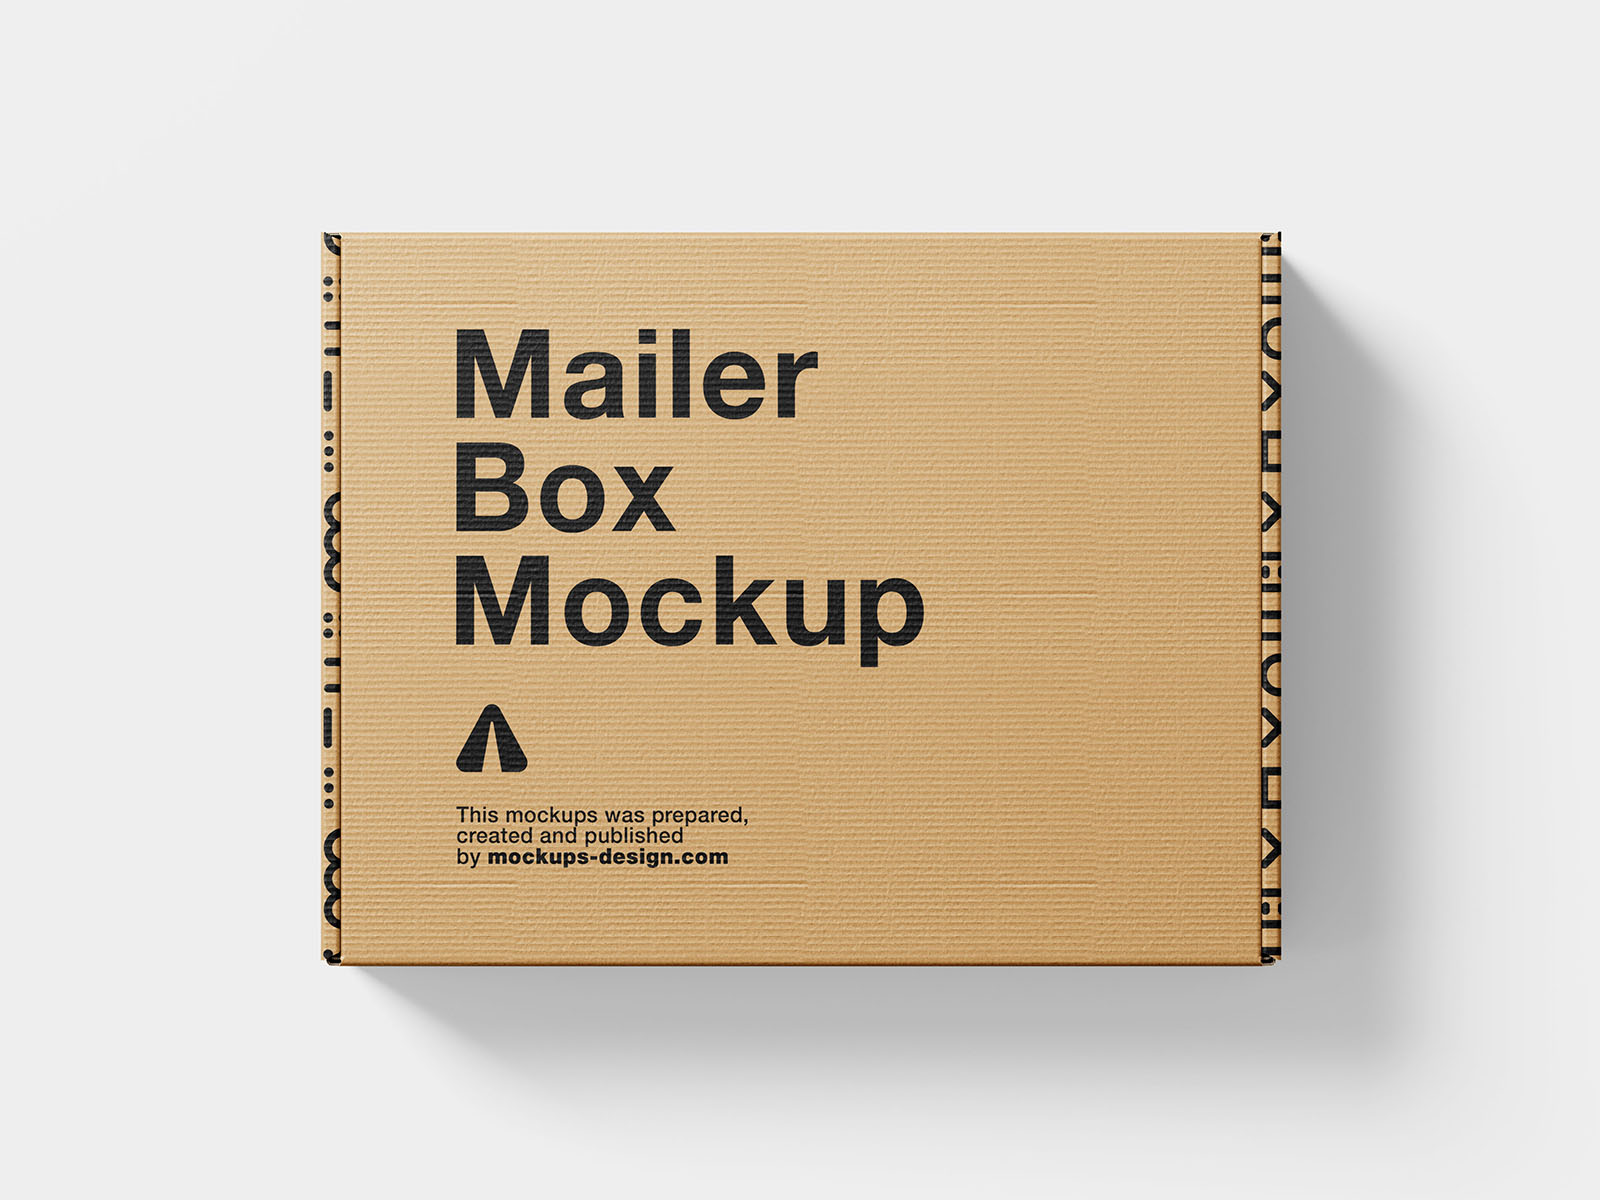 Mailer box mockup / 30 x 23 x 8 cm